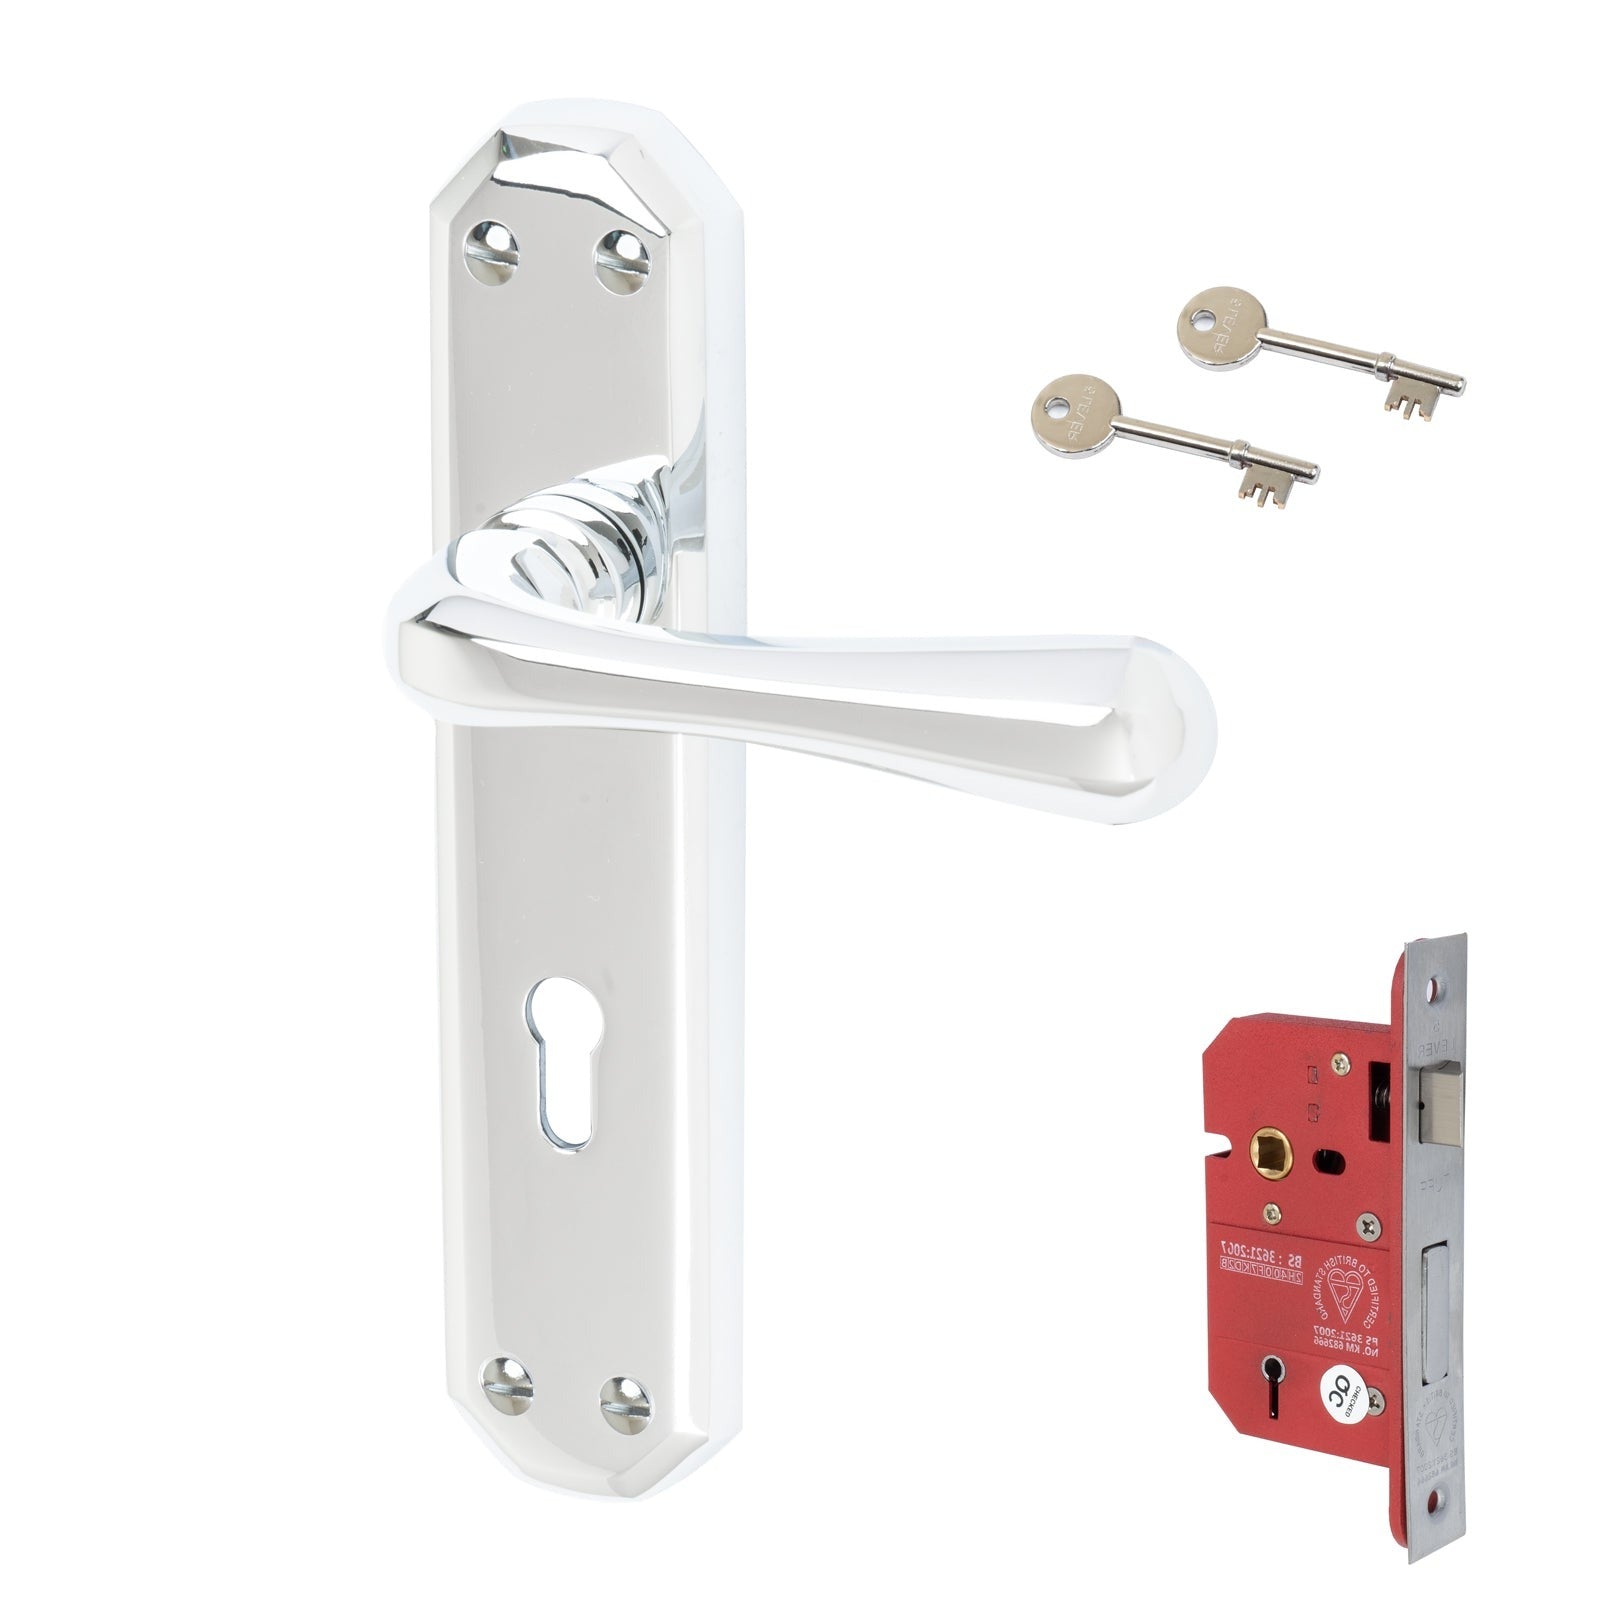 Charlbury Door Handles On Plate 5 Lever Lock Handle Set in Polished Chrome 